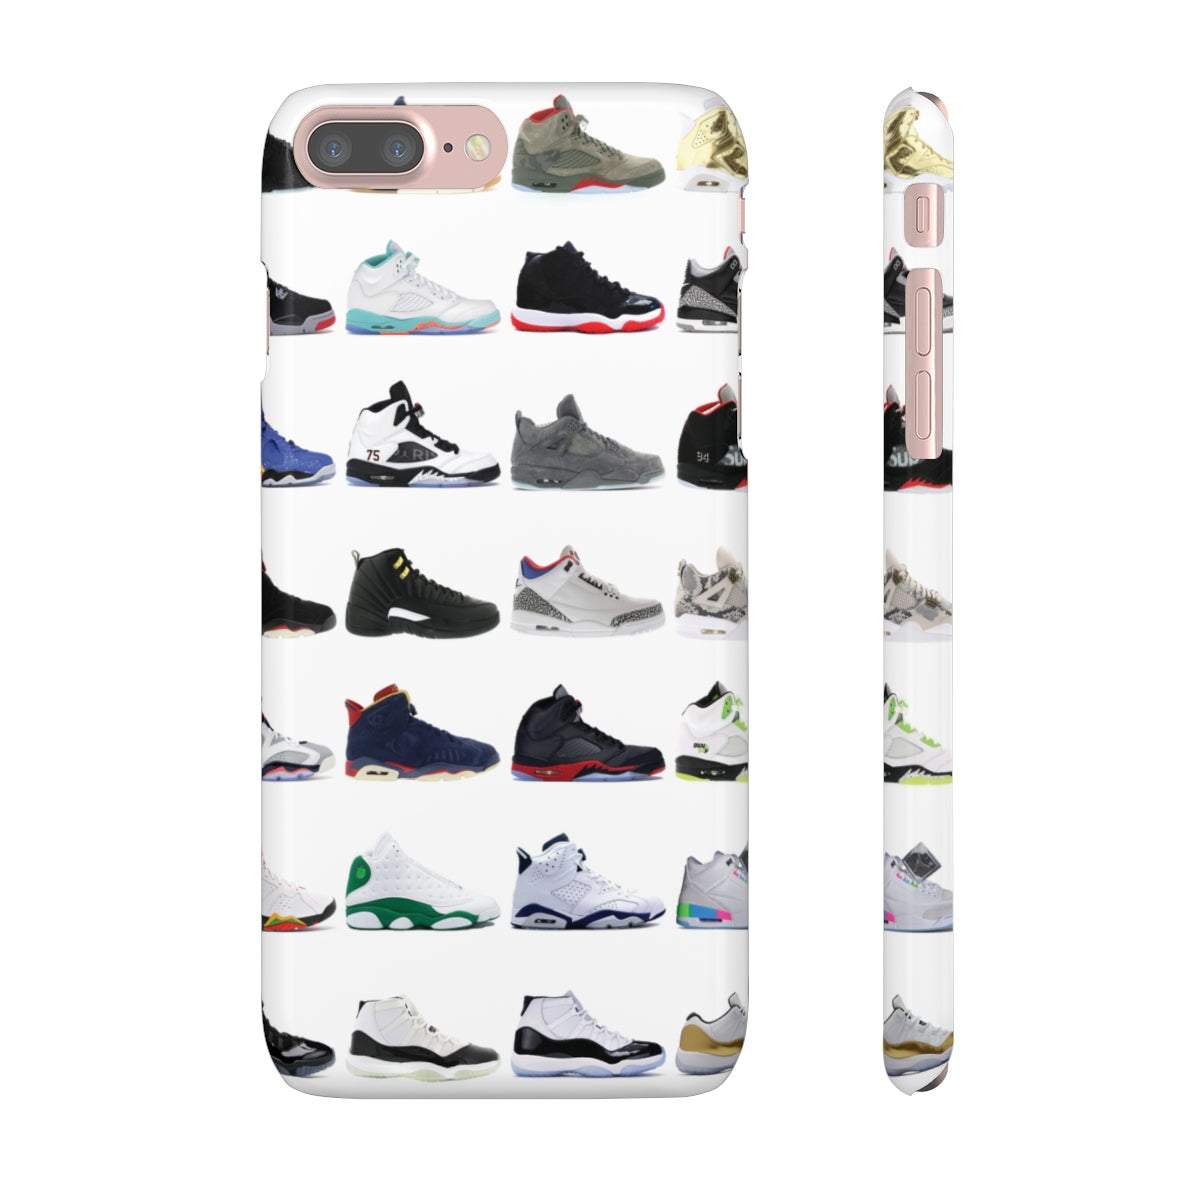 Jordan Sneakers inspired iPhone Snap Case-iPhone 7 Plus-Glossy-Archethype